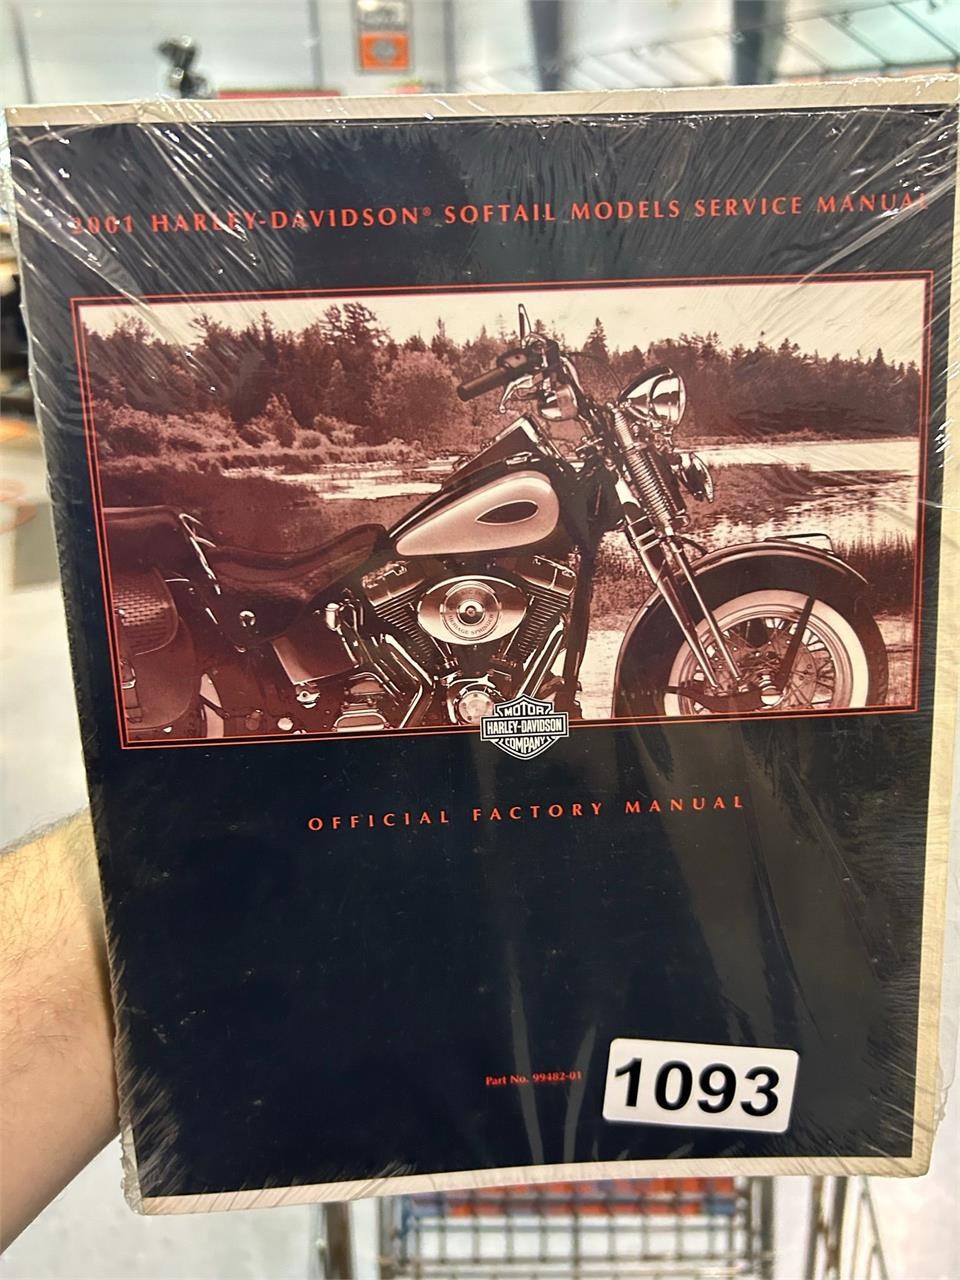 Harley Davidson Closeout Auction 2 - Osantowski, Inc